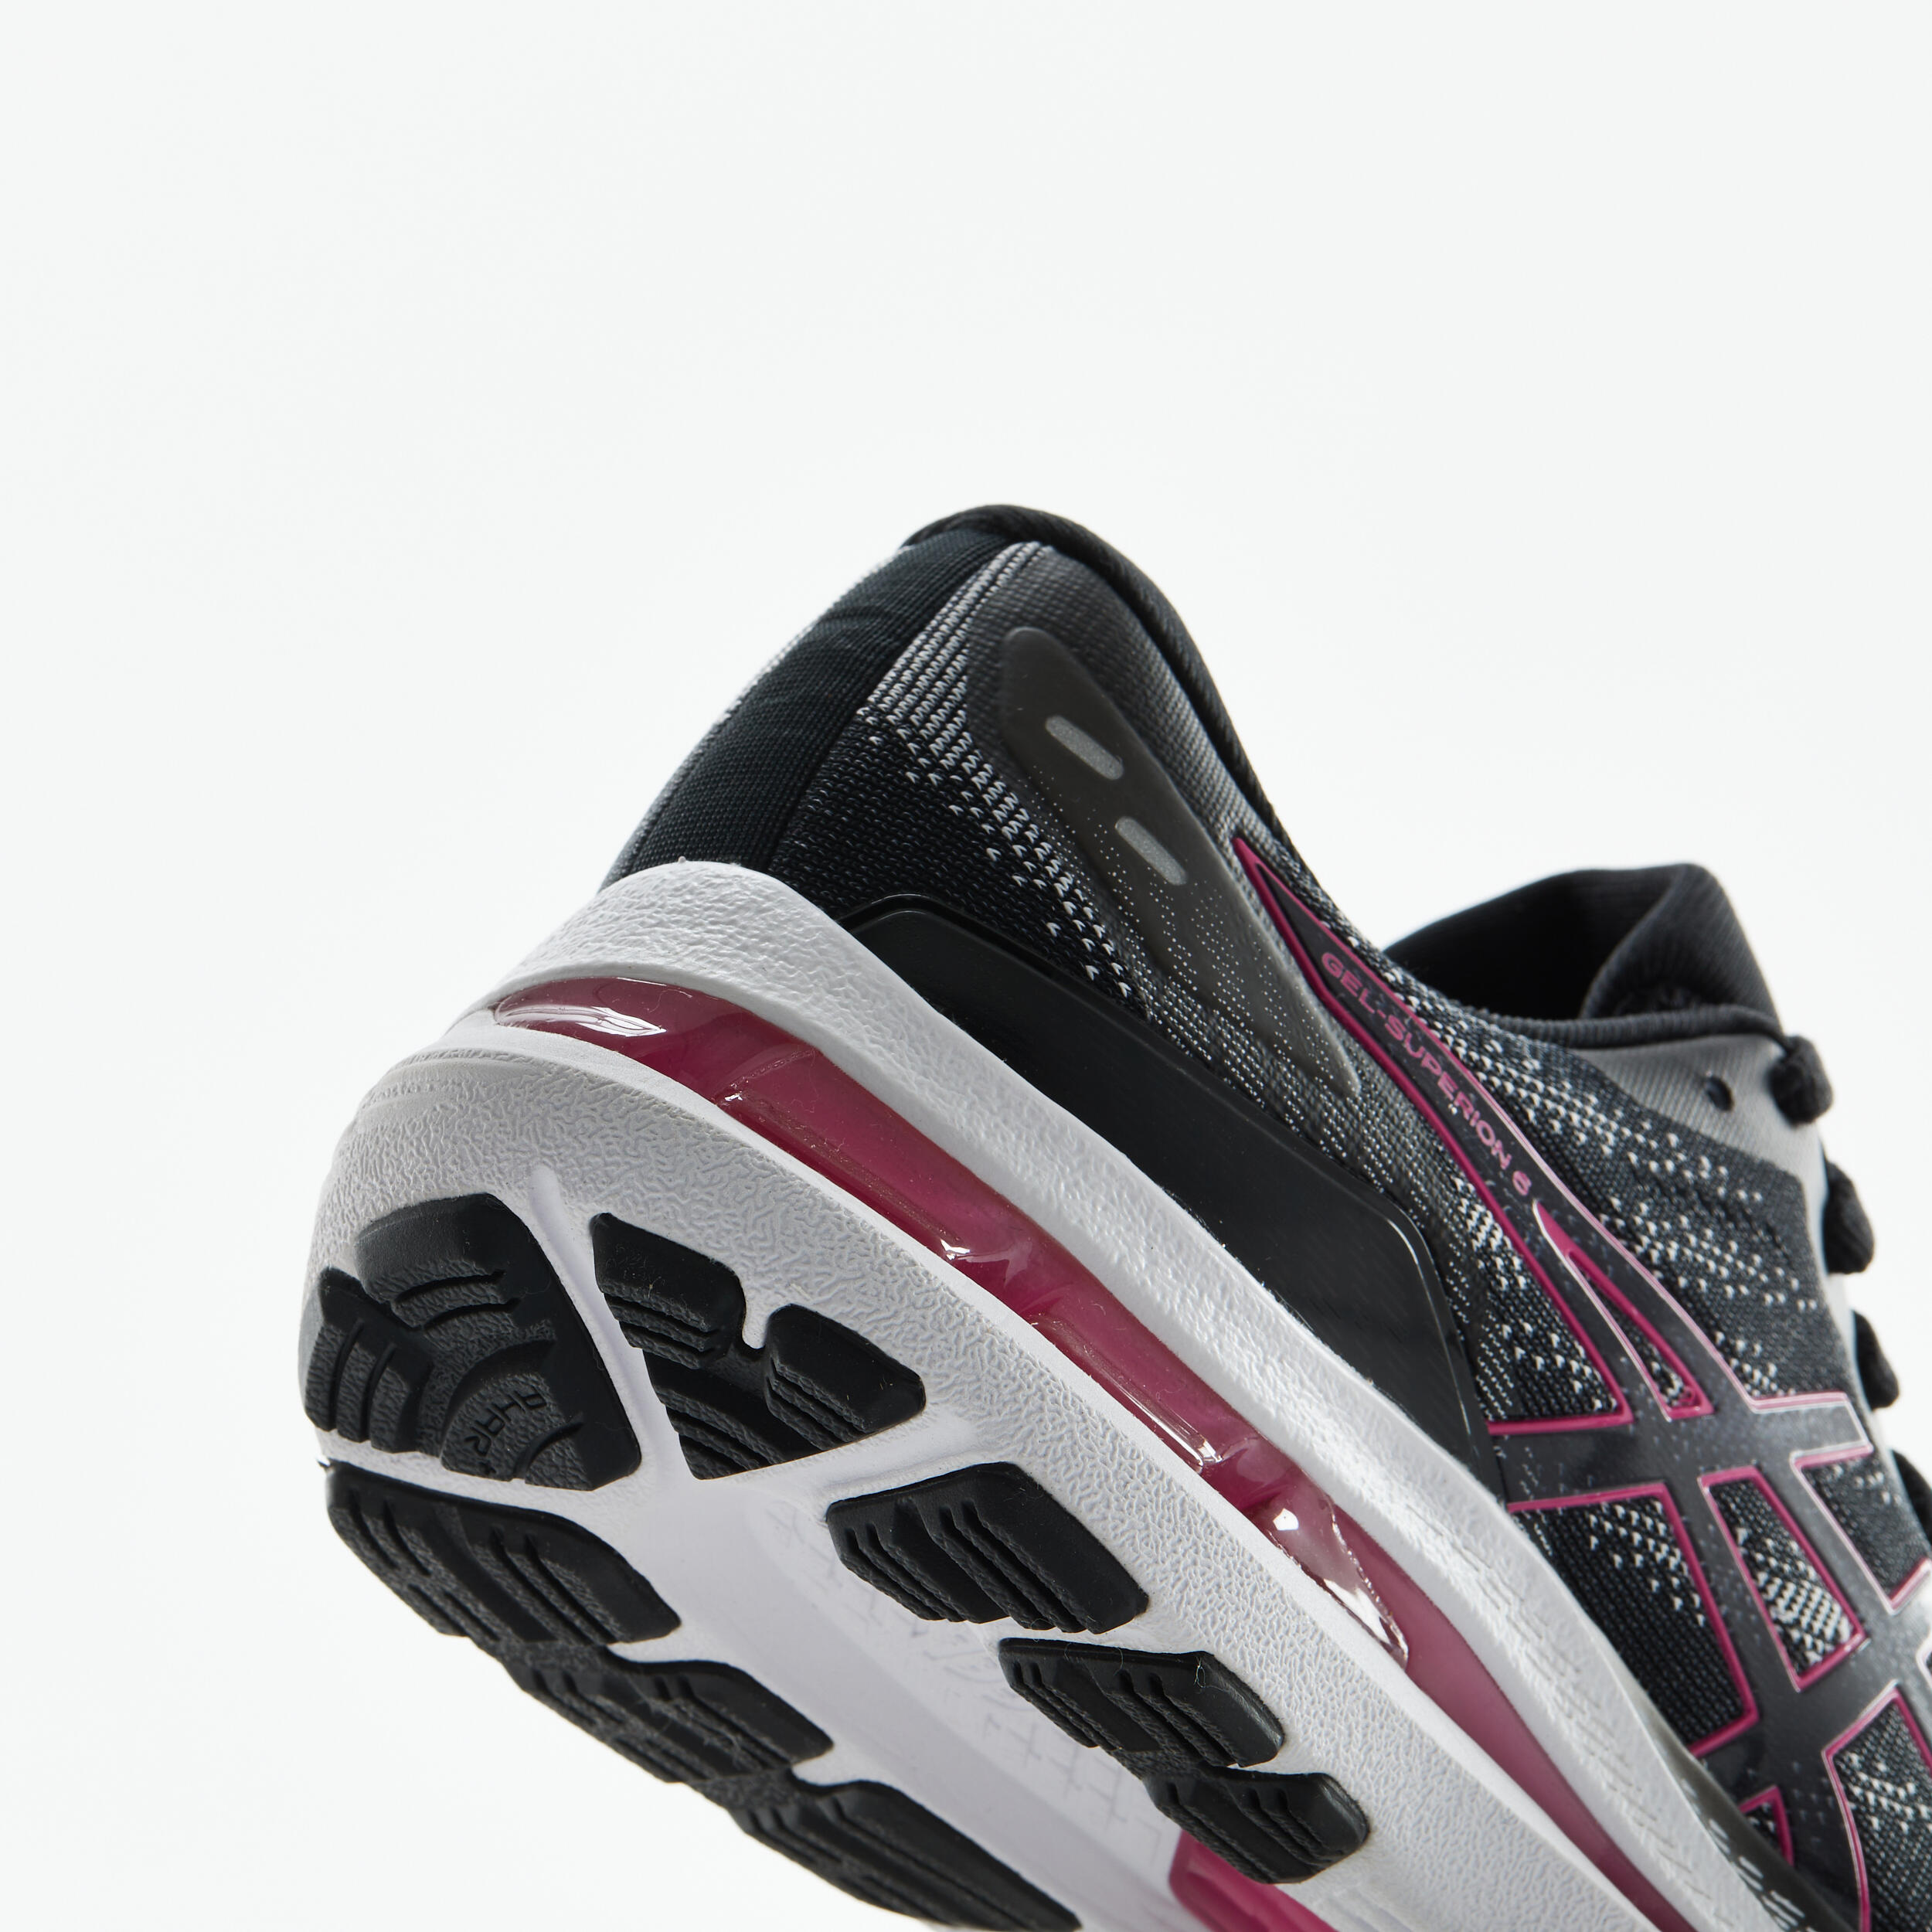 GEL SUPERION 6 Women's Running Shoes - BLACK 5/7